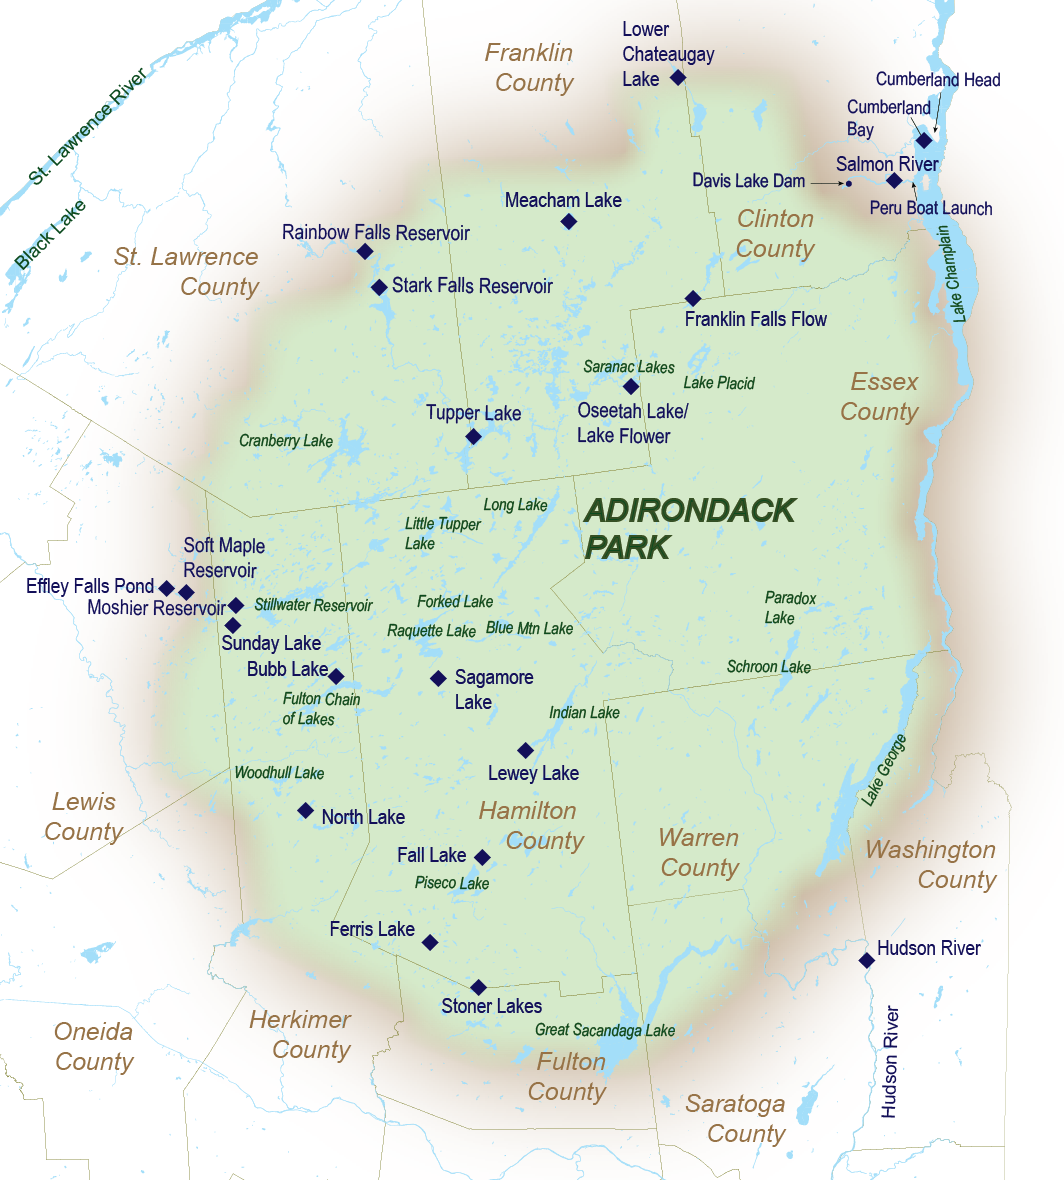 Map of the Adirondack Region